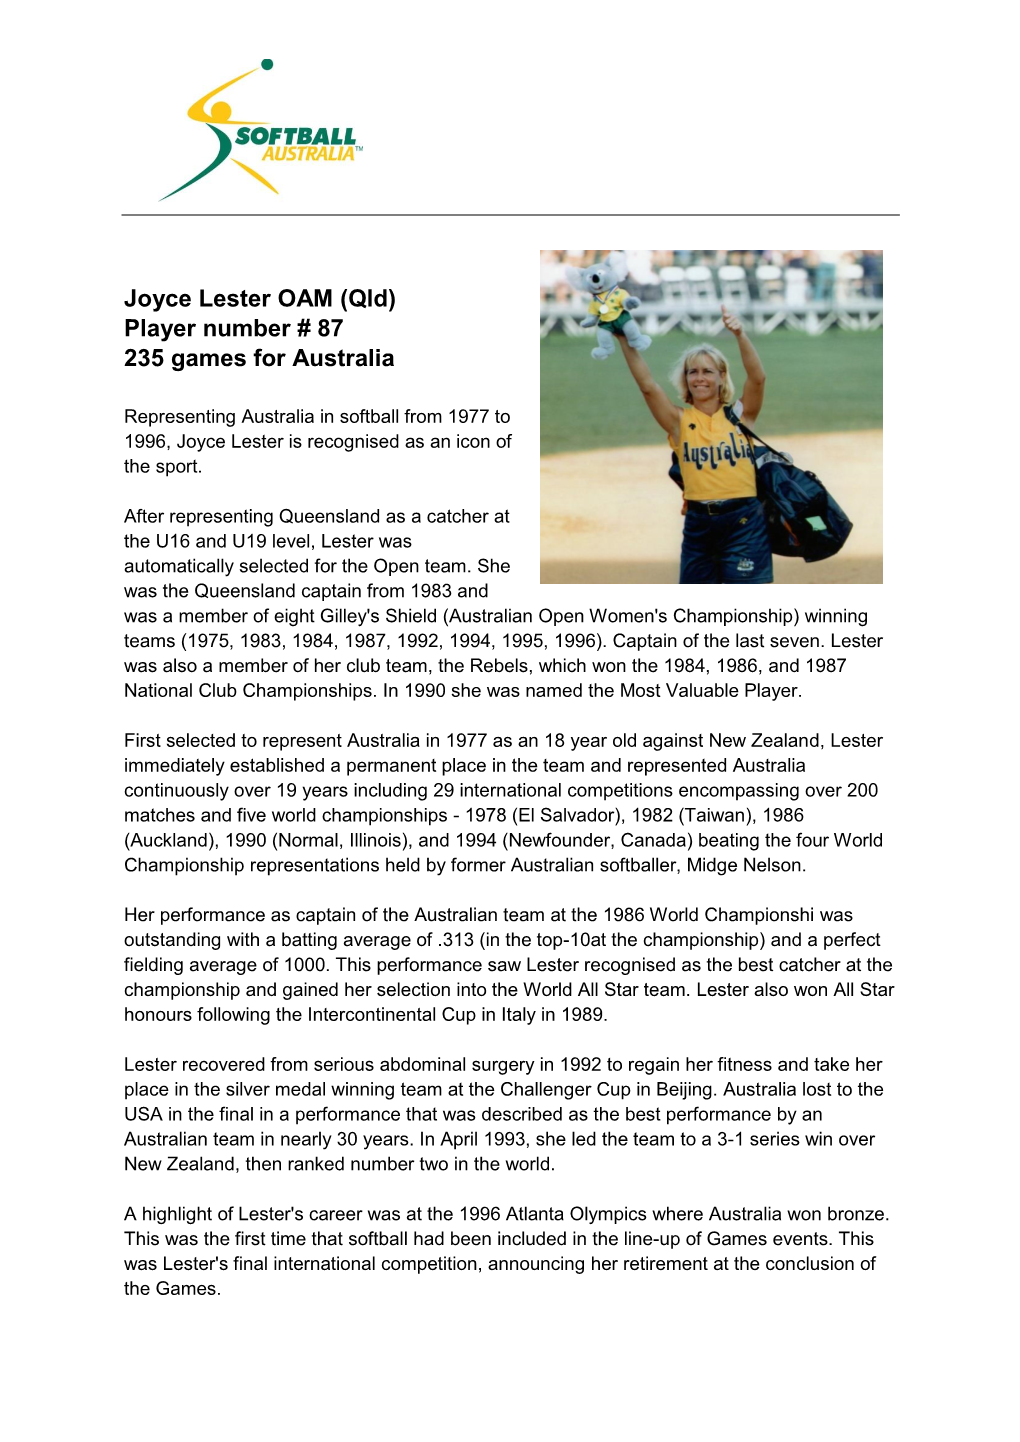 Joyce Lester OAM (Qld) Player Number # 87 235 Games for Australia